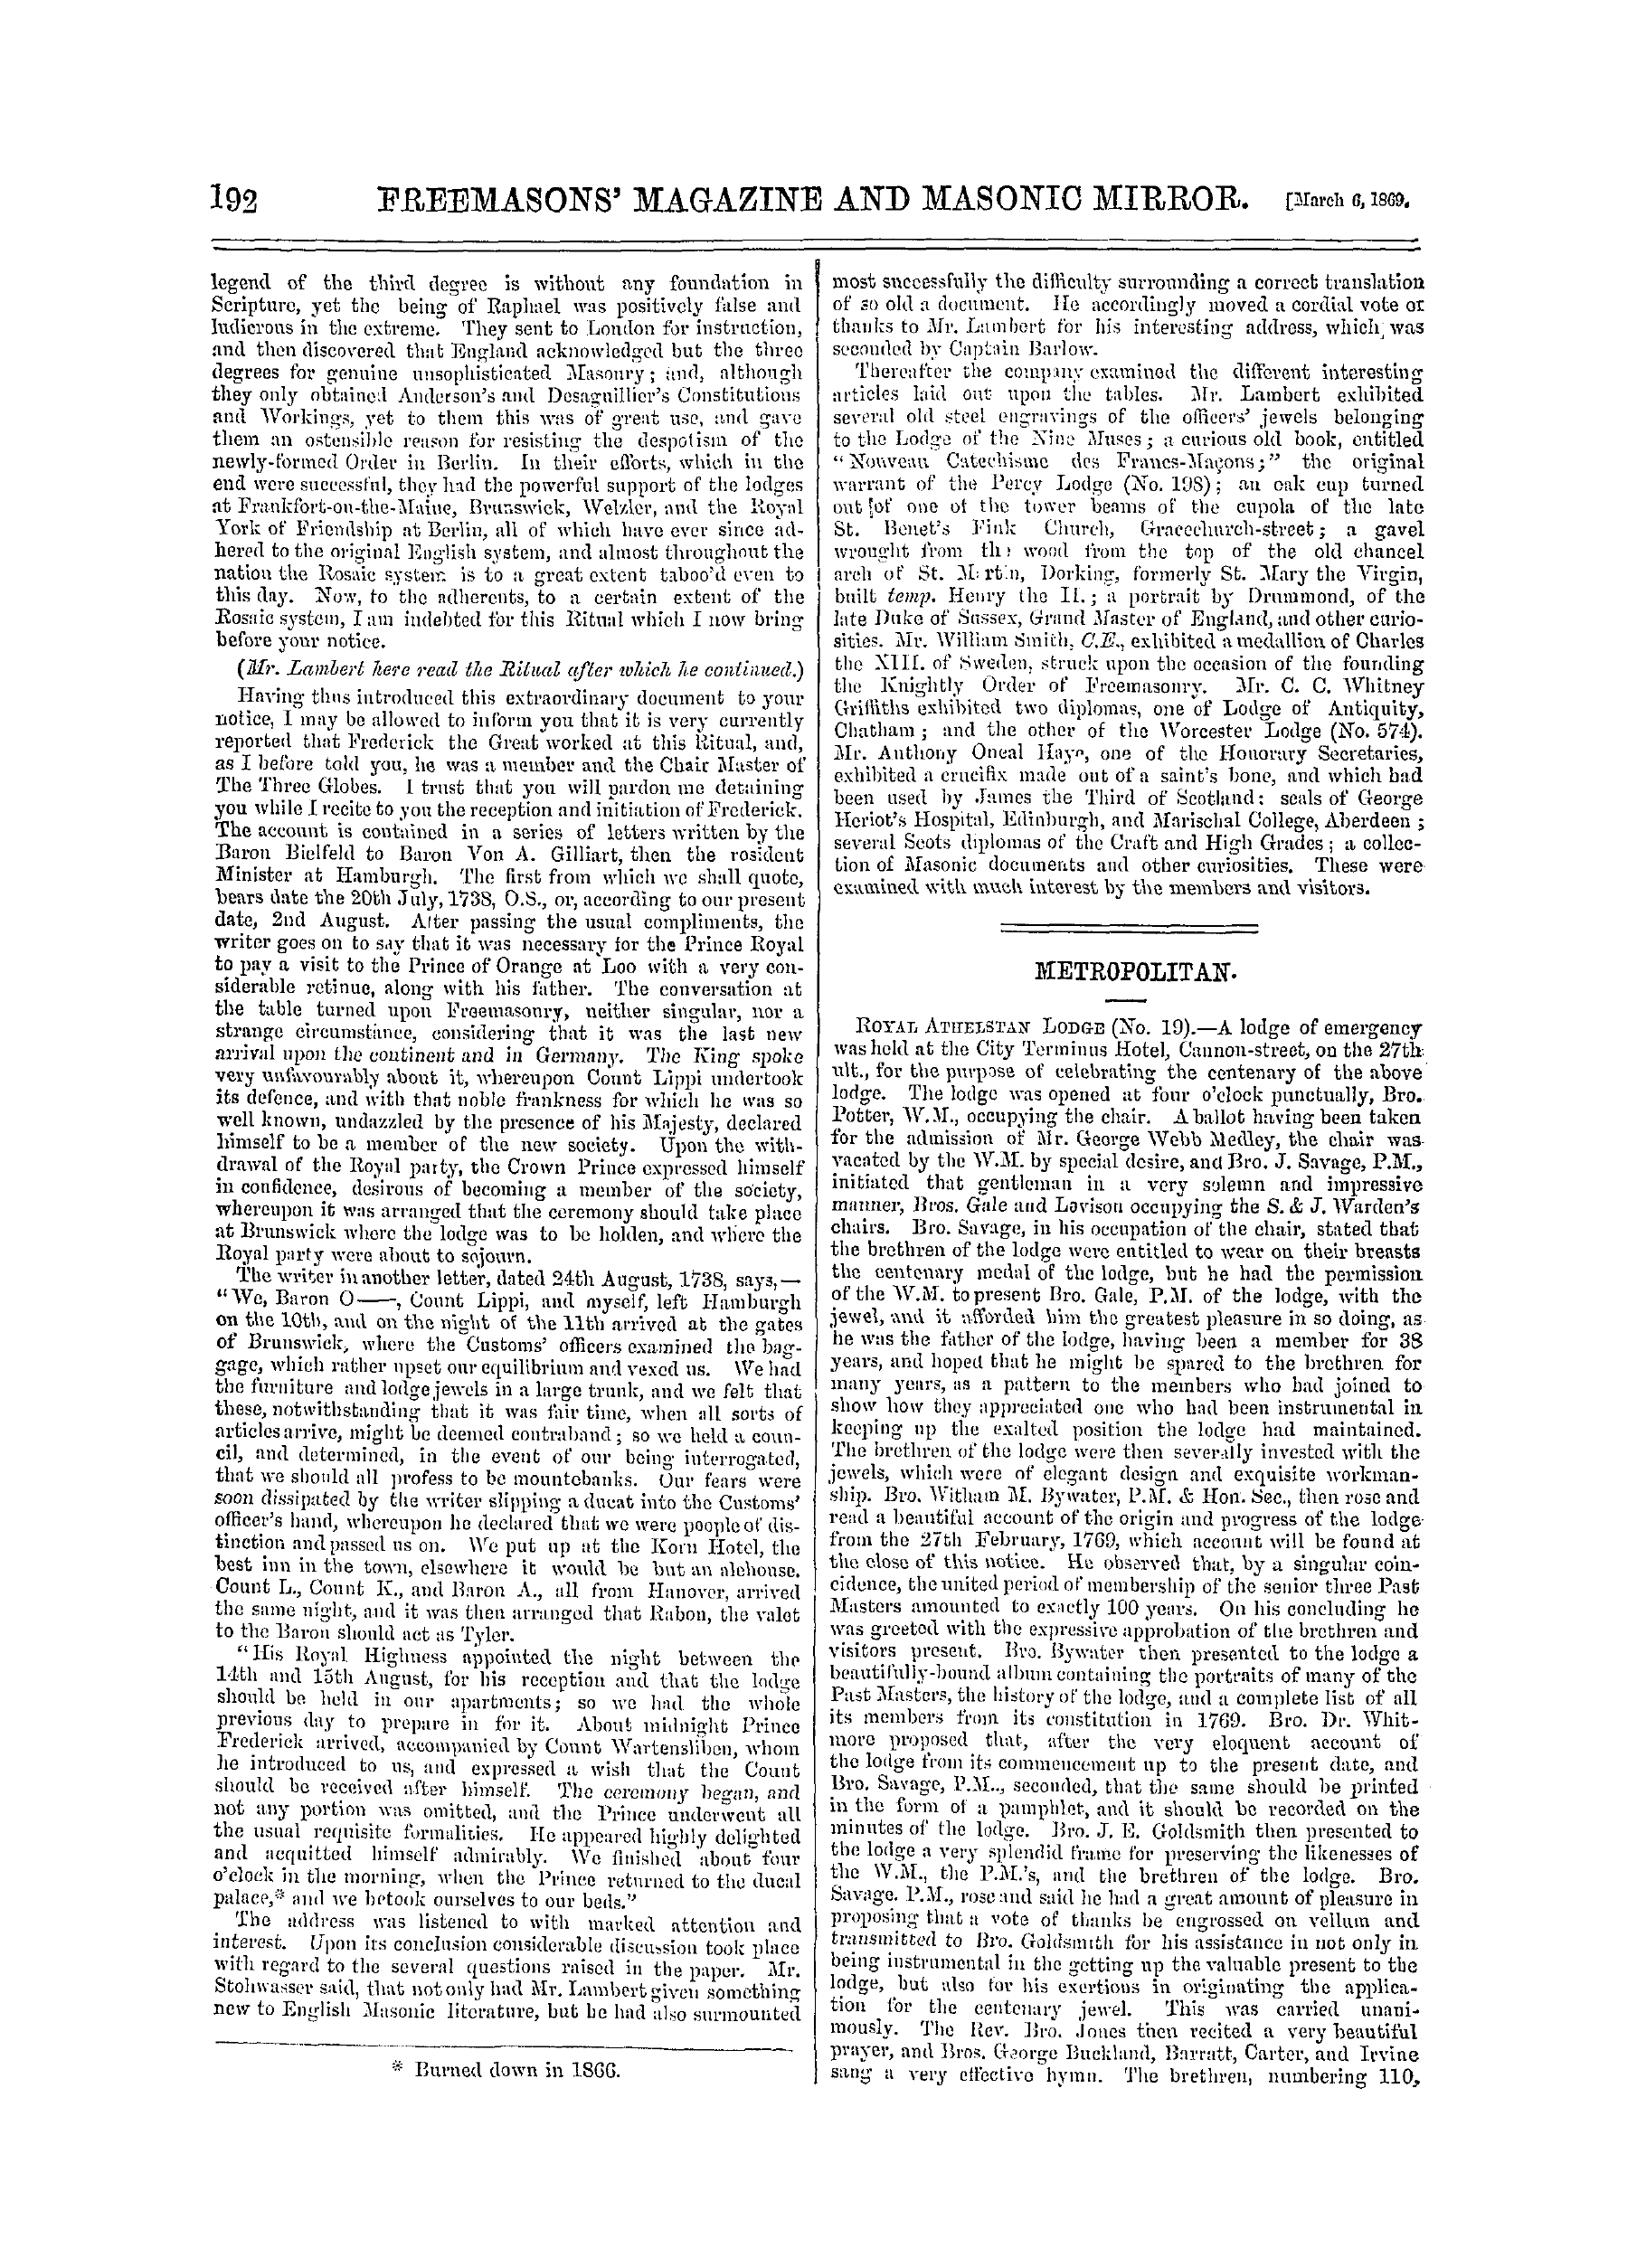 The Freemasons' Monthly Magazine: 1869-03-06 - Masonic Archæological Institute.